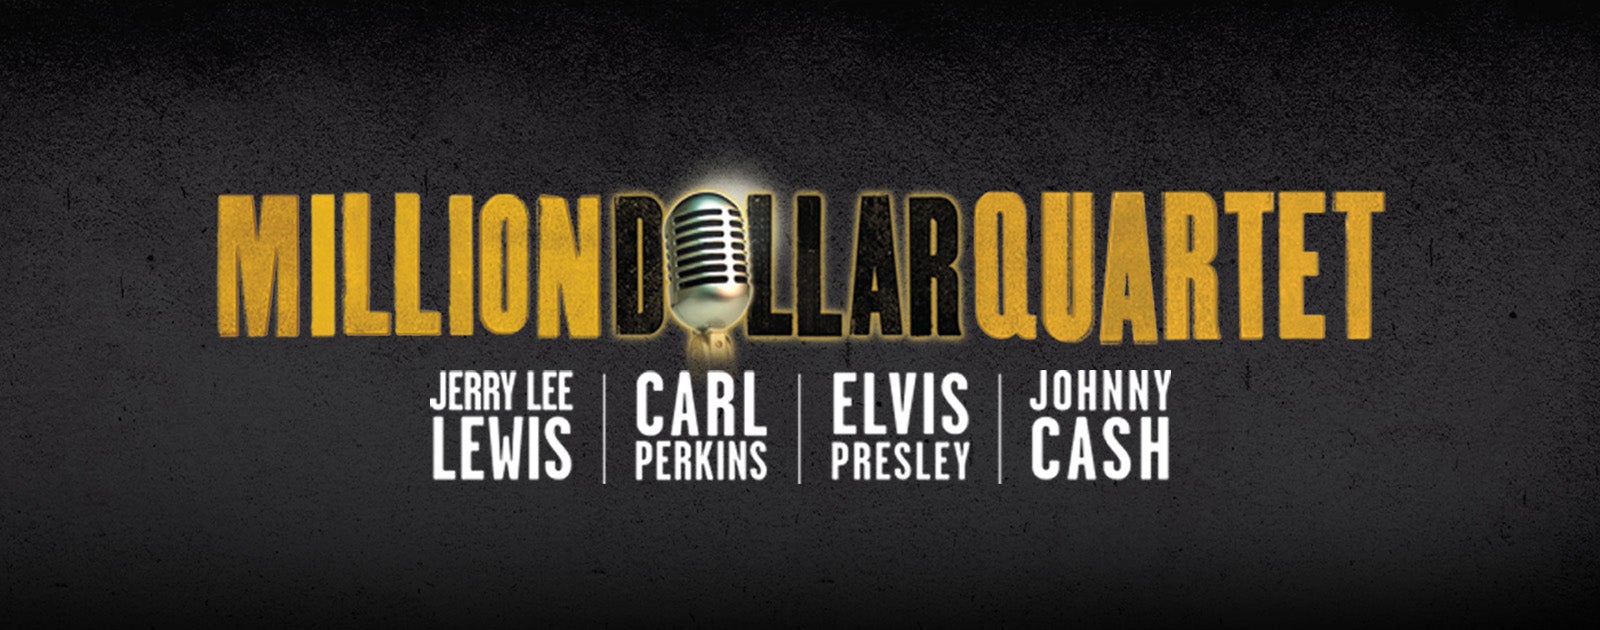 Canceled - Million Dollar Quartet